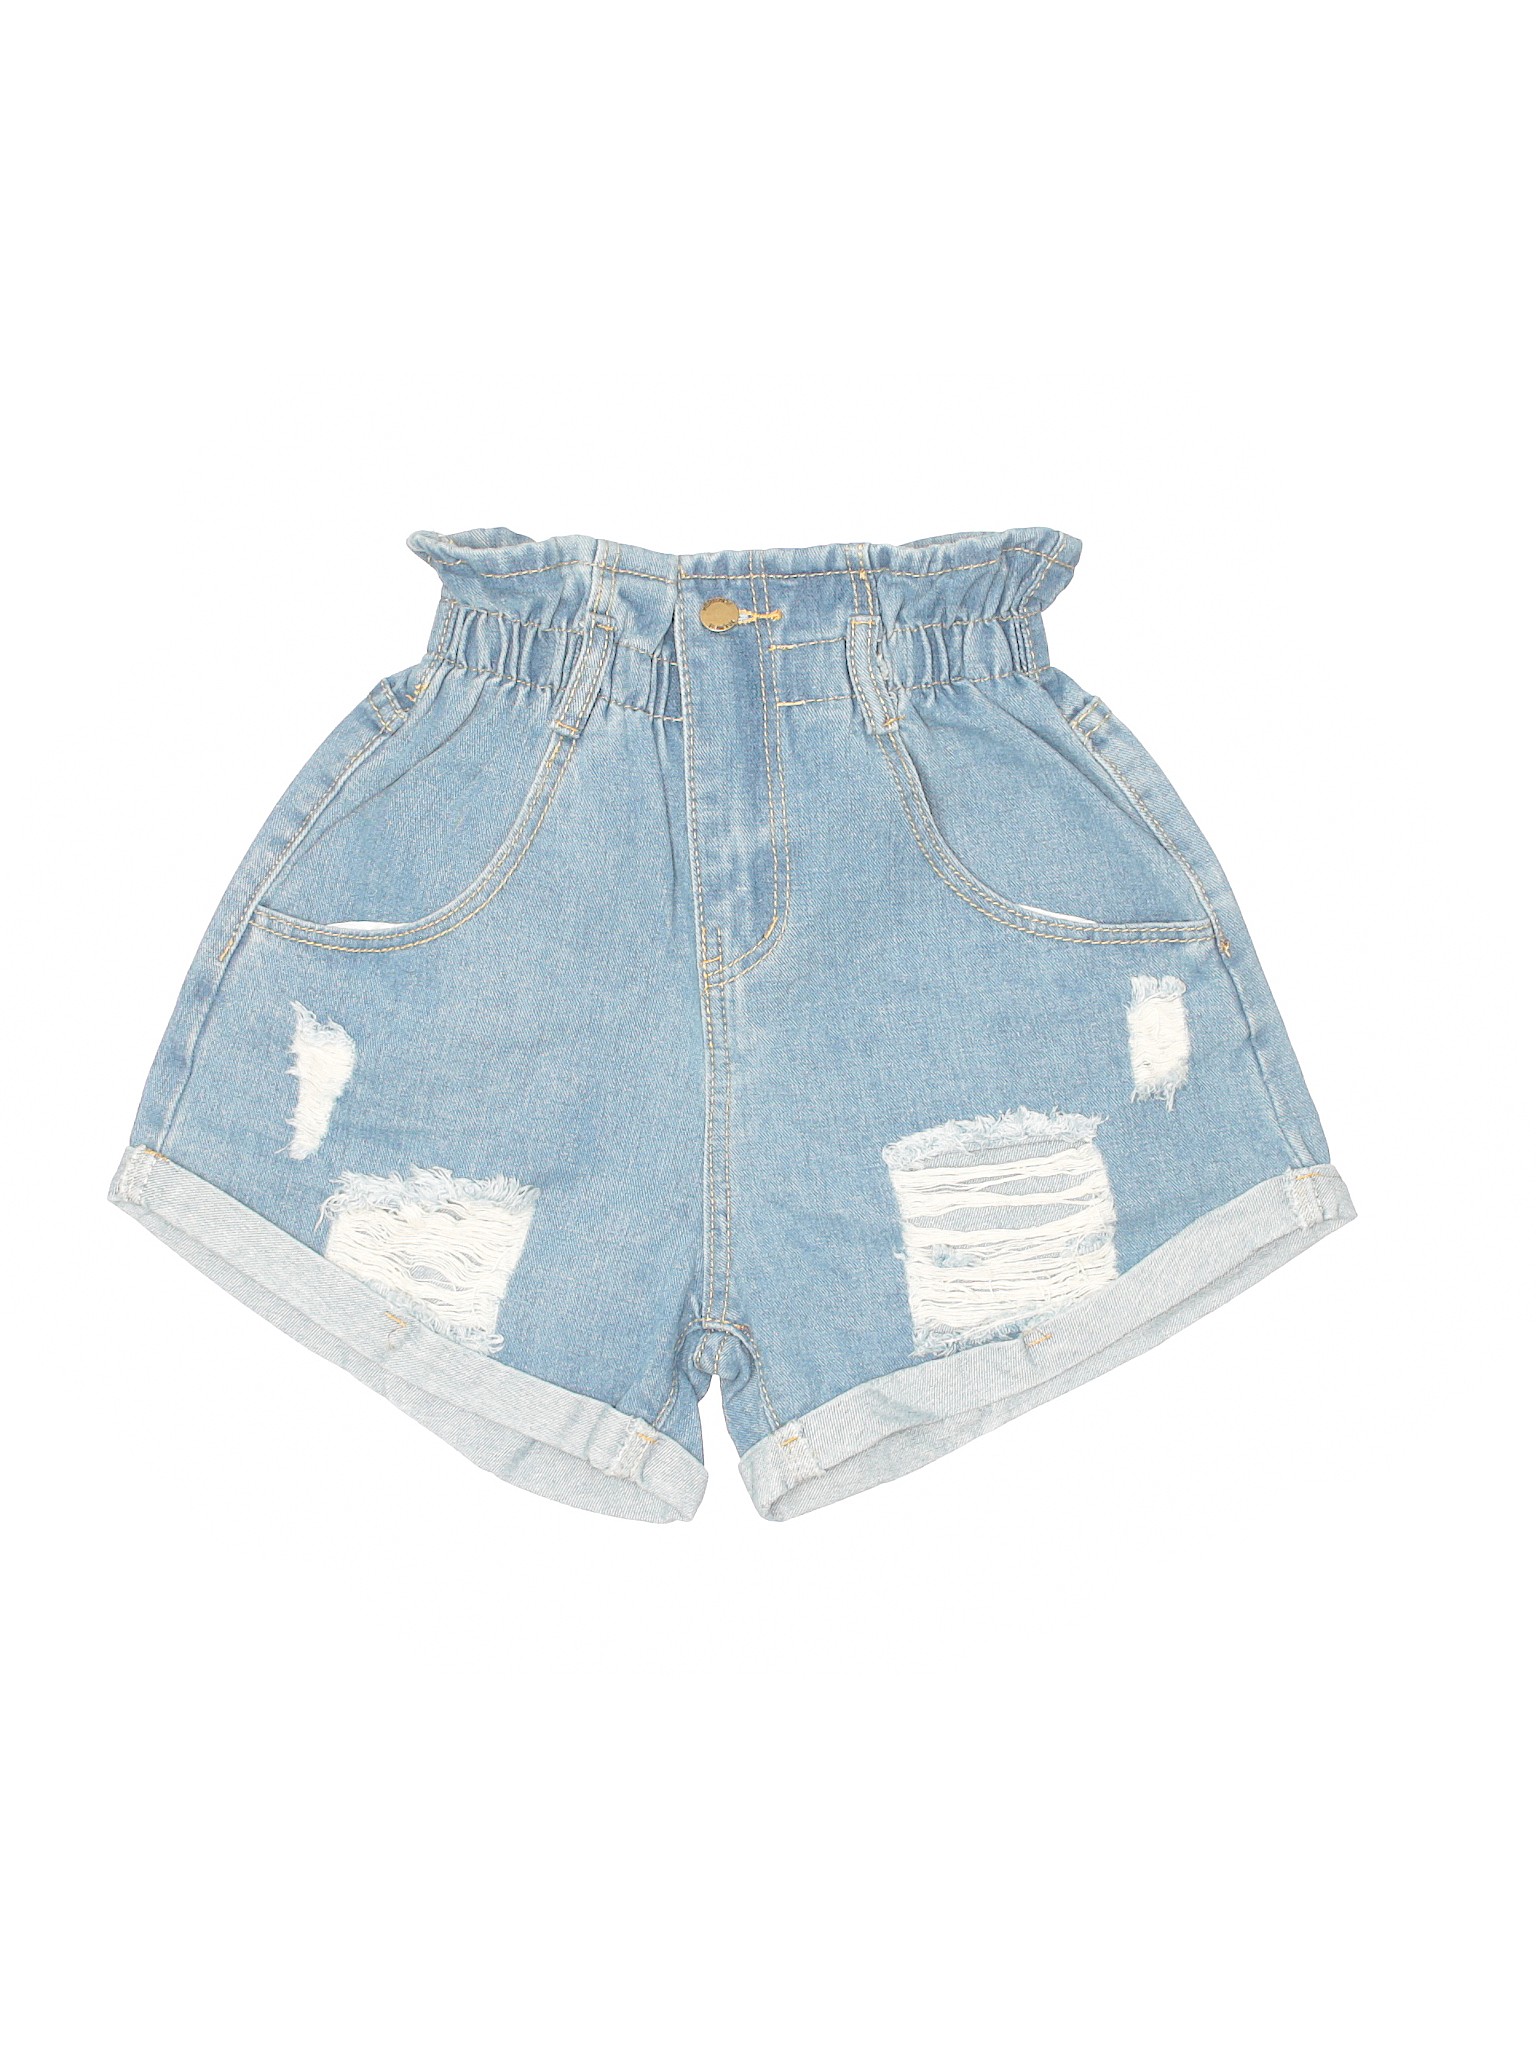 Shein Women Blue Denim Shorts S | eBay